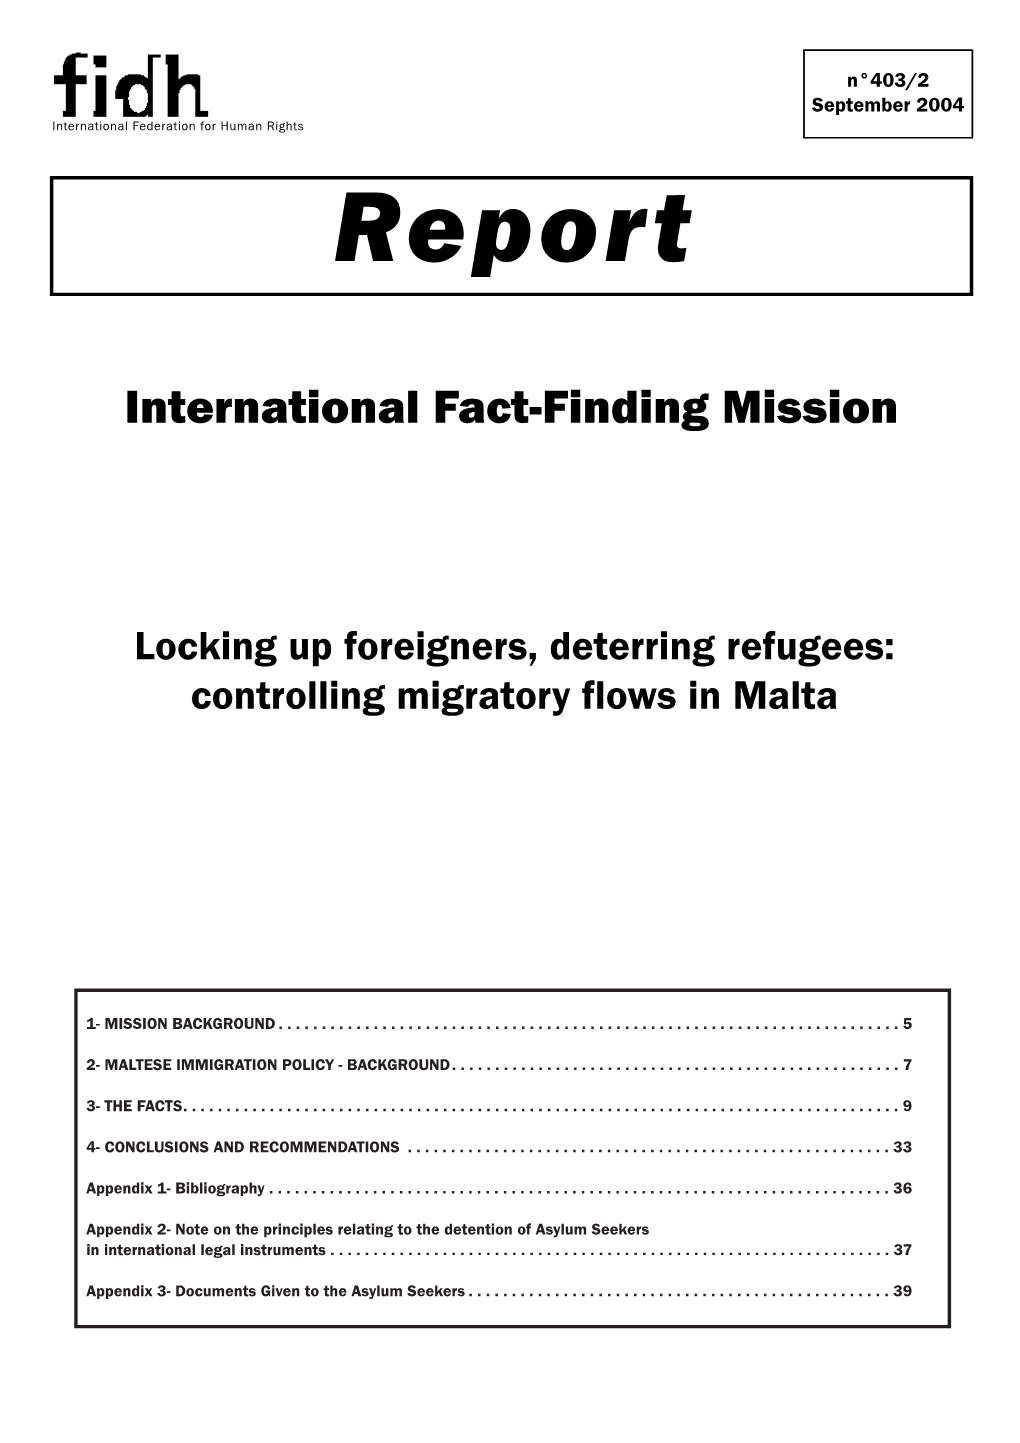 Controlling Migratory Flows in Malta (